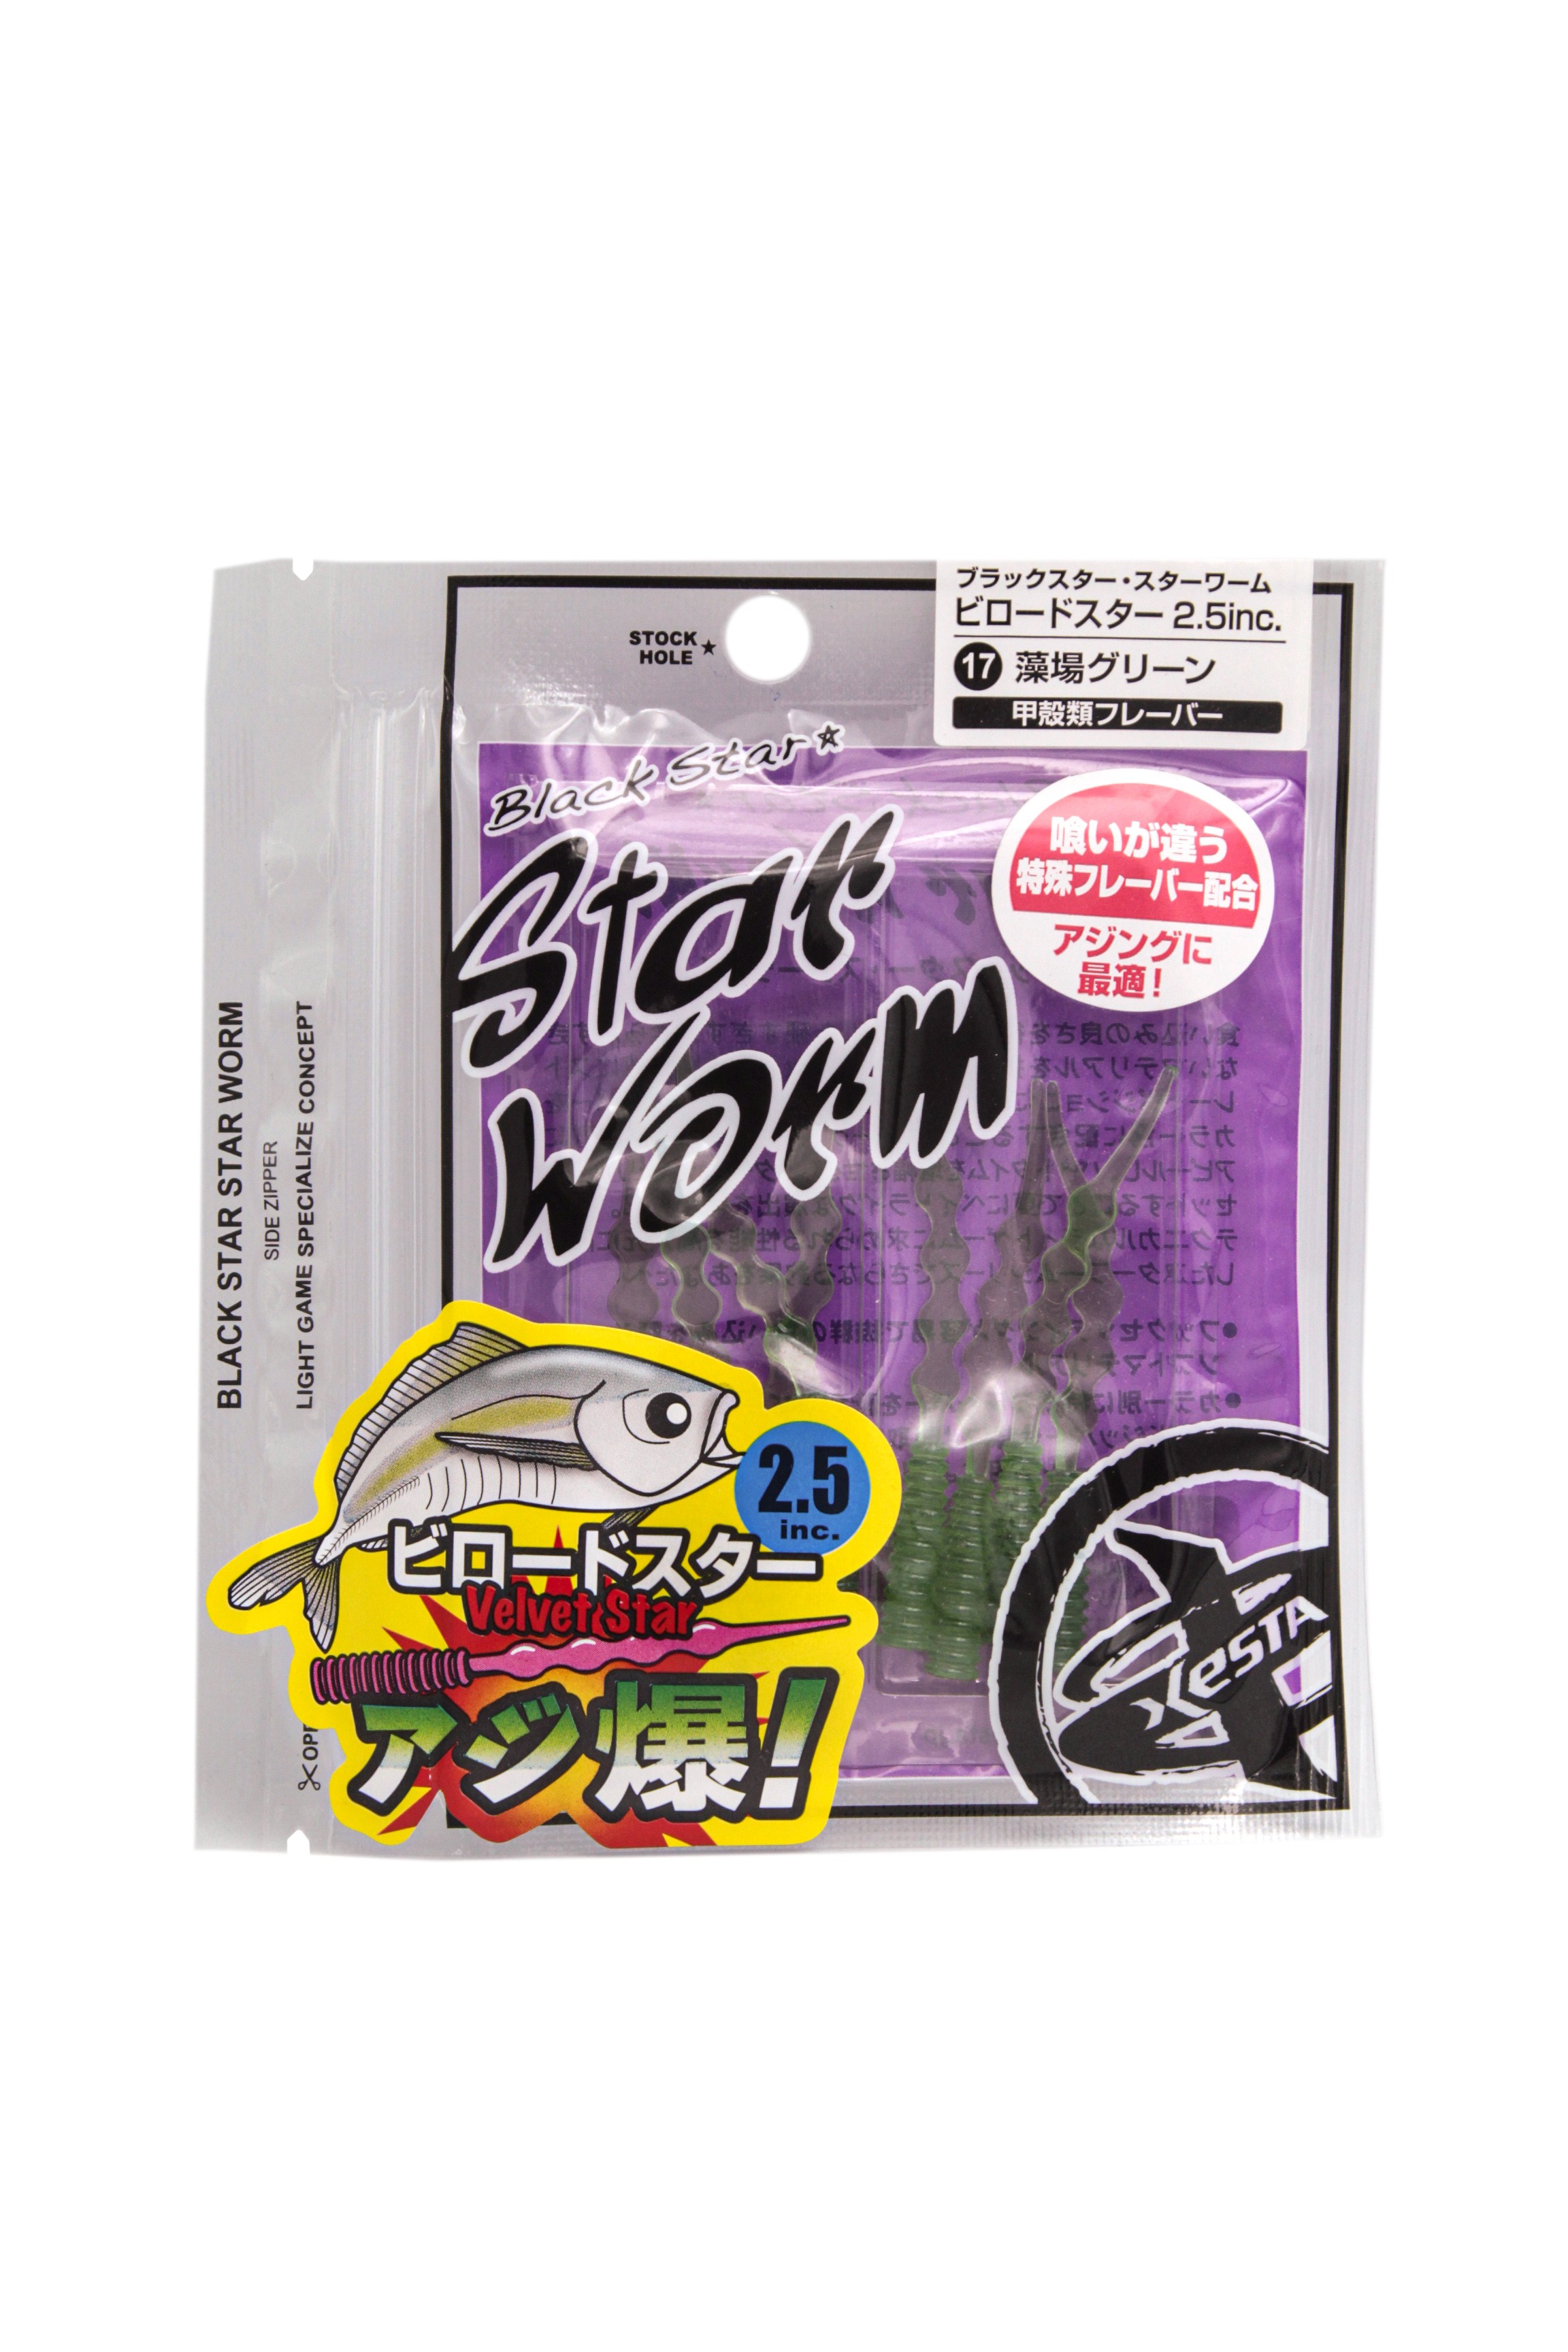 Приманка Xesta Black star worm velvet star 2,5" 17.mg - фото 1